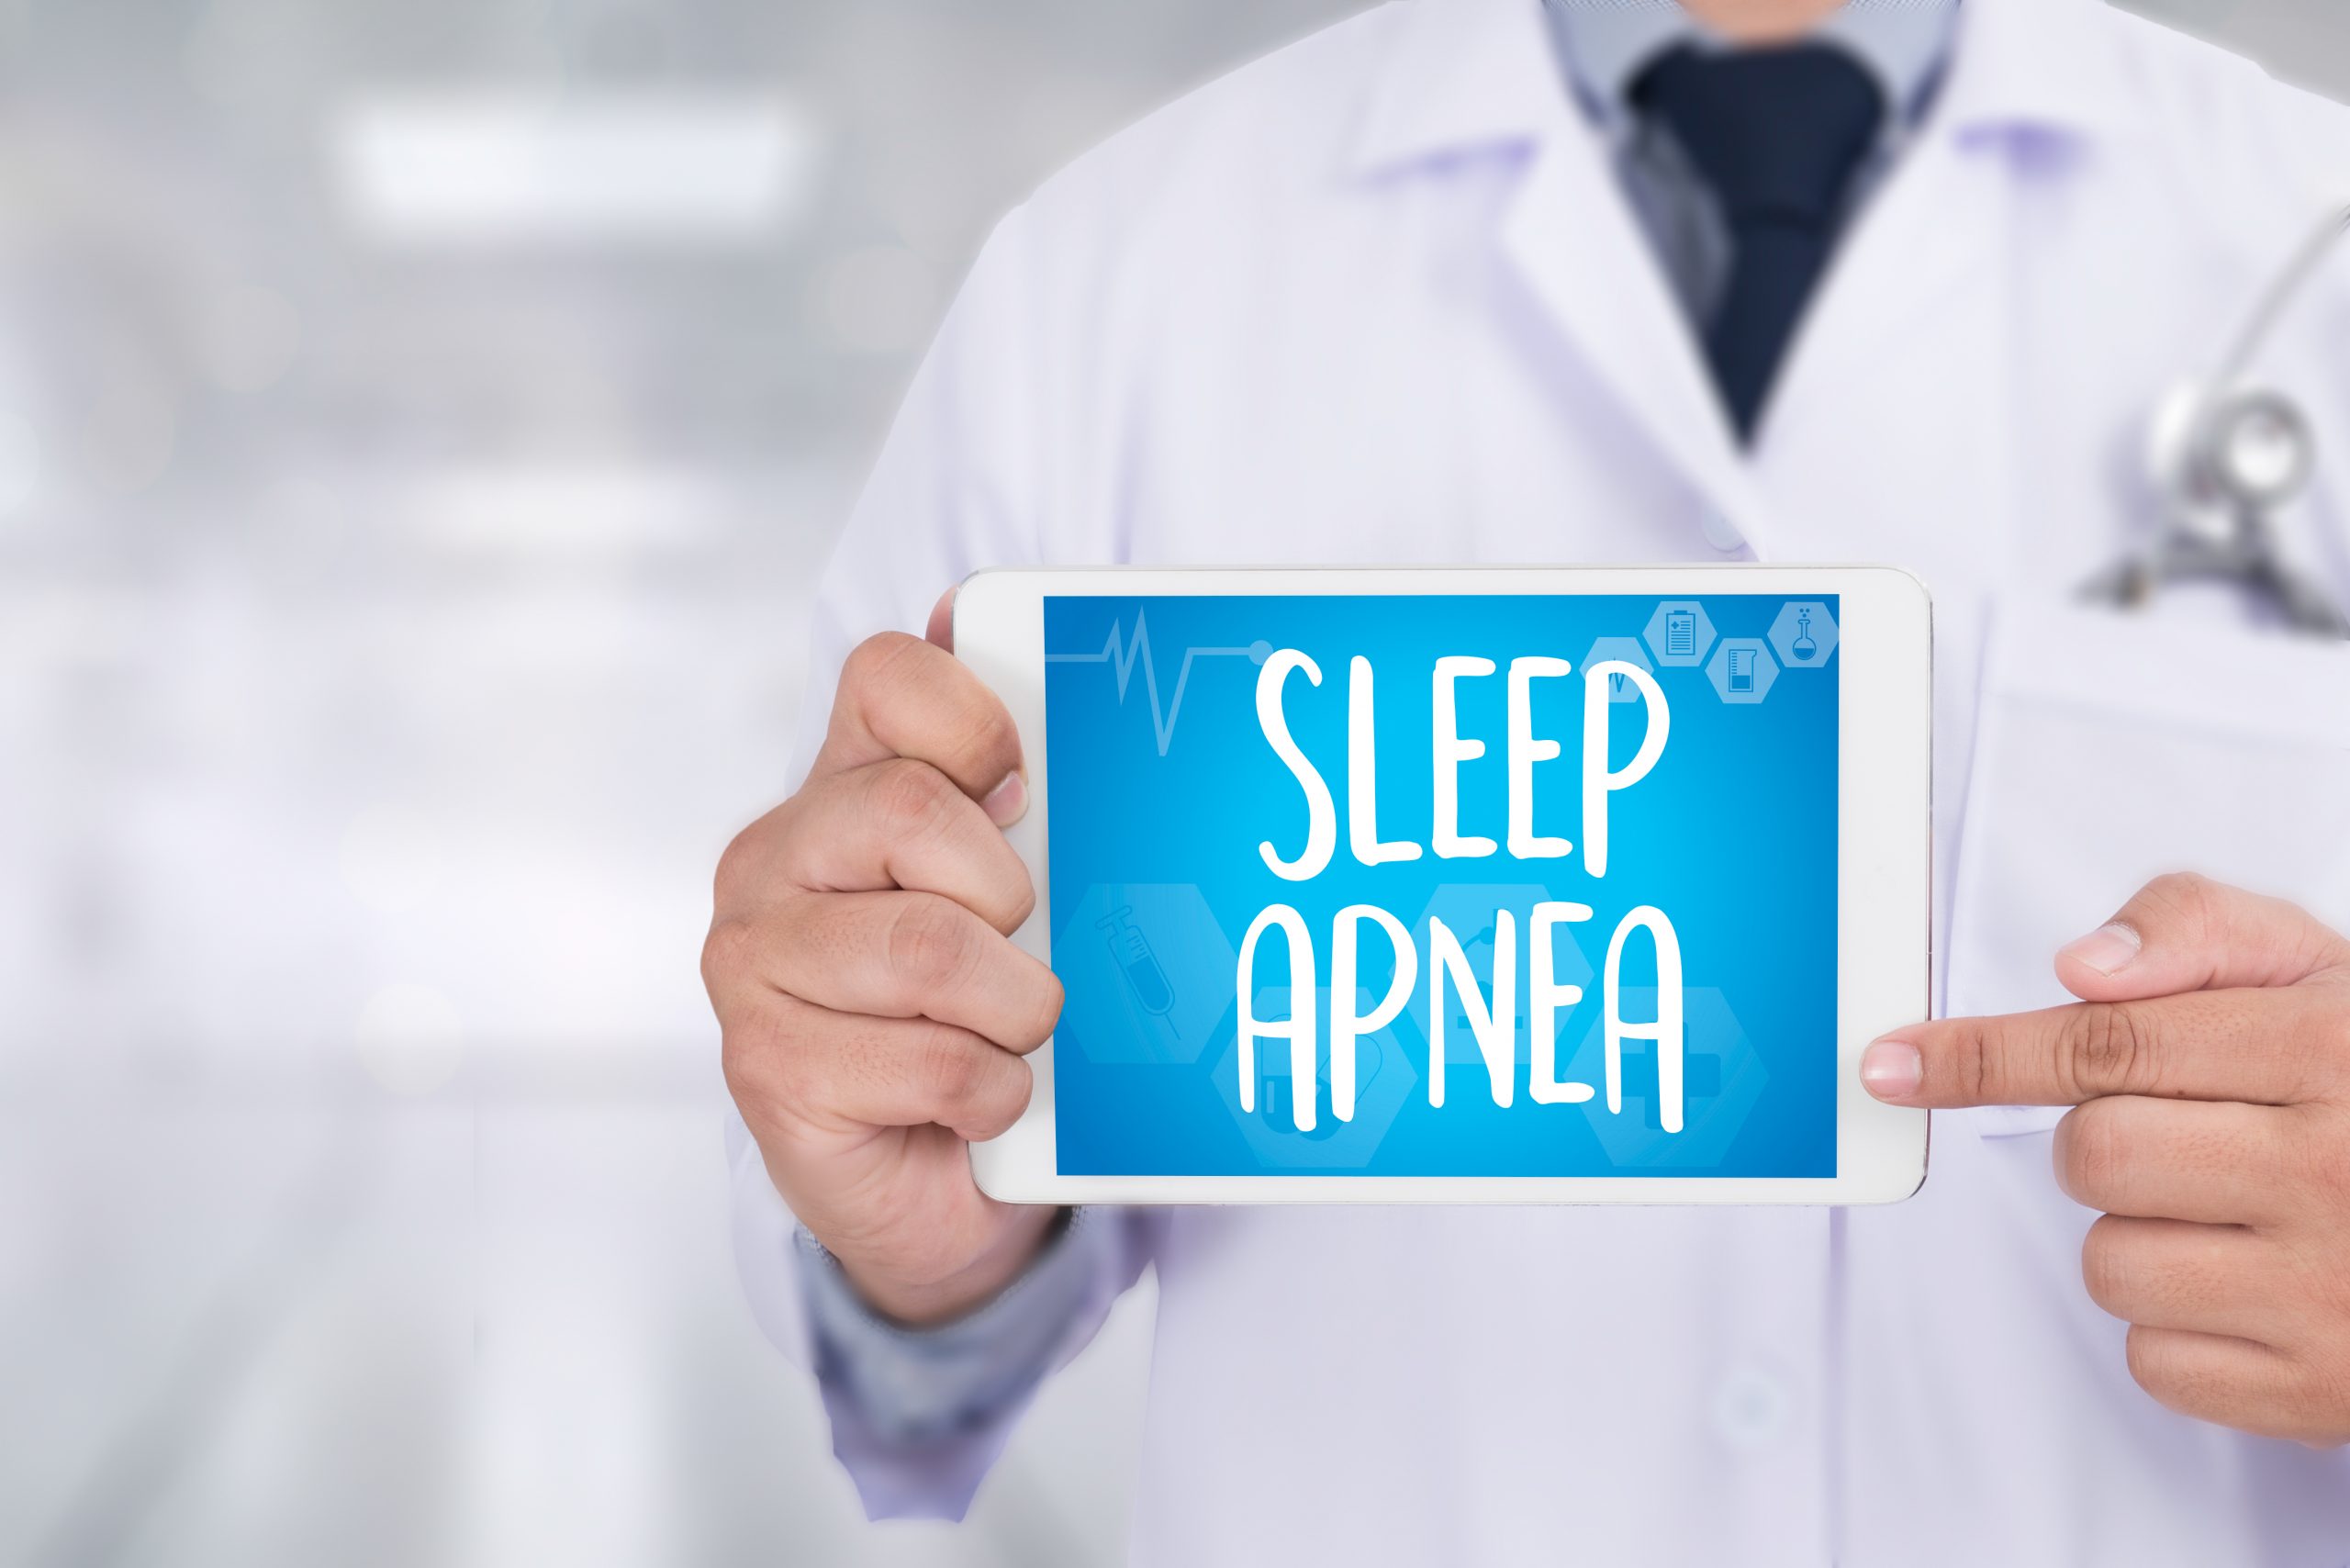 VA Rating for Sleep Apnea